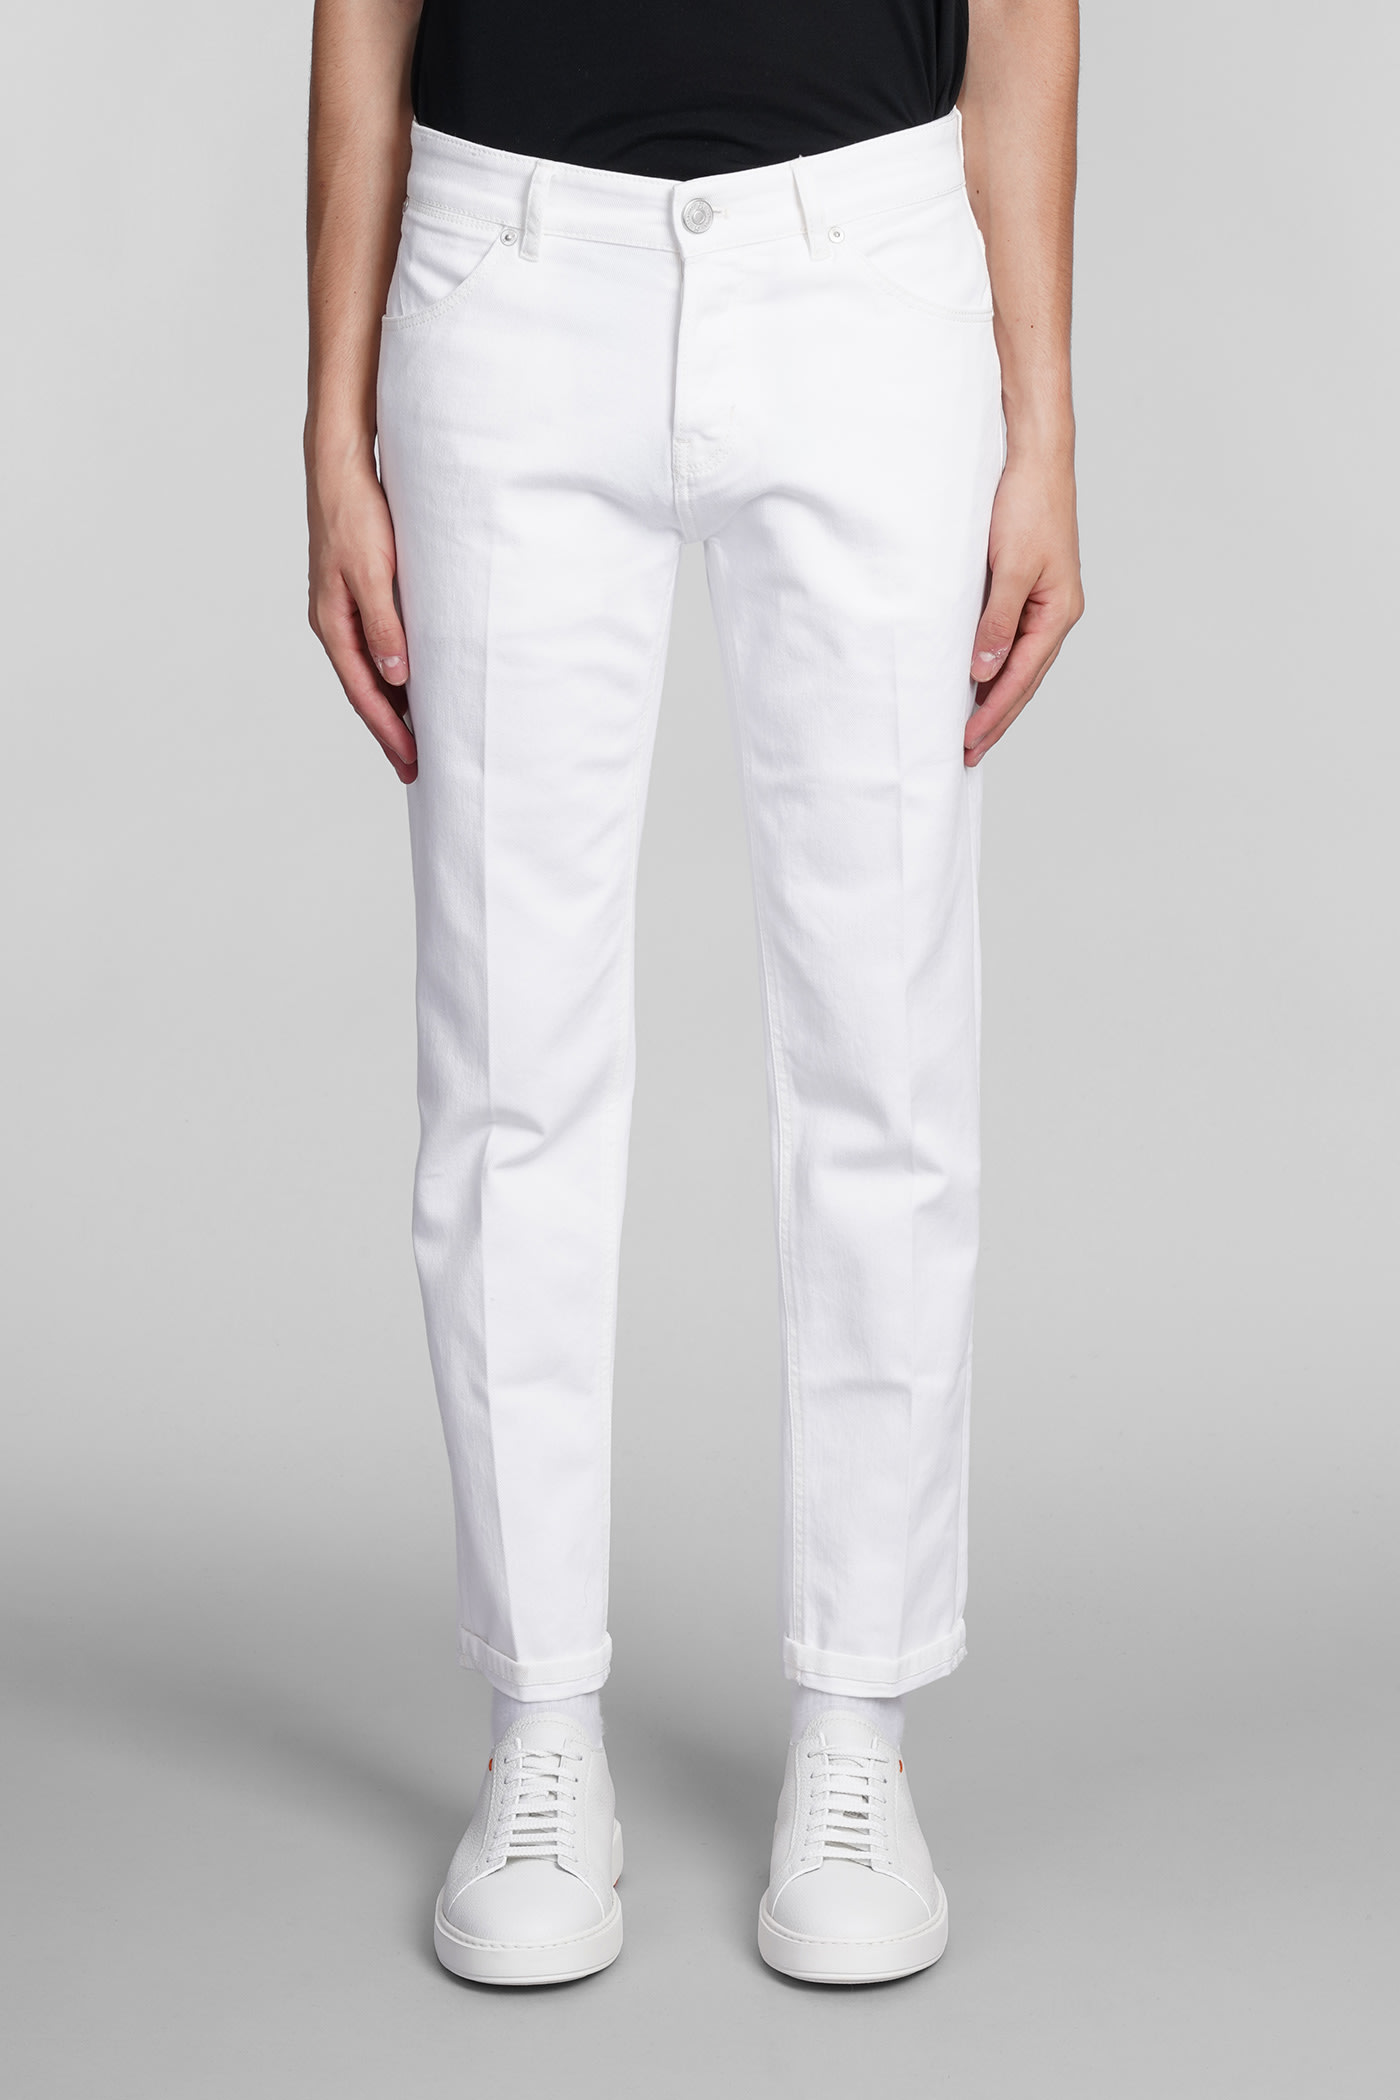 Geloofsbelijdenis afbetalen voordat Pt01 Jeans In White Cotton | ModeSens